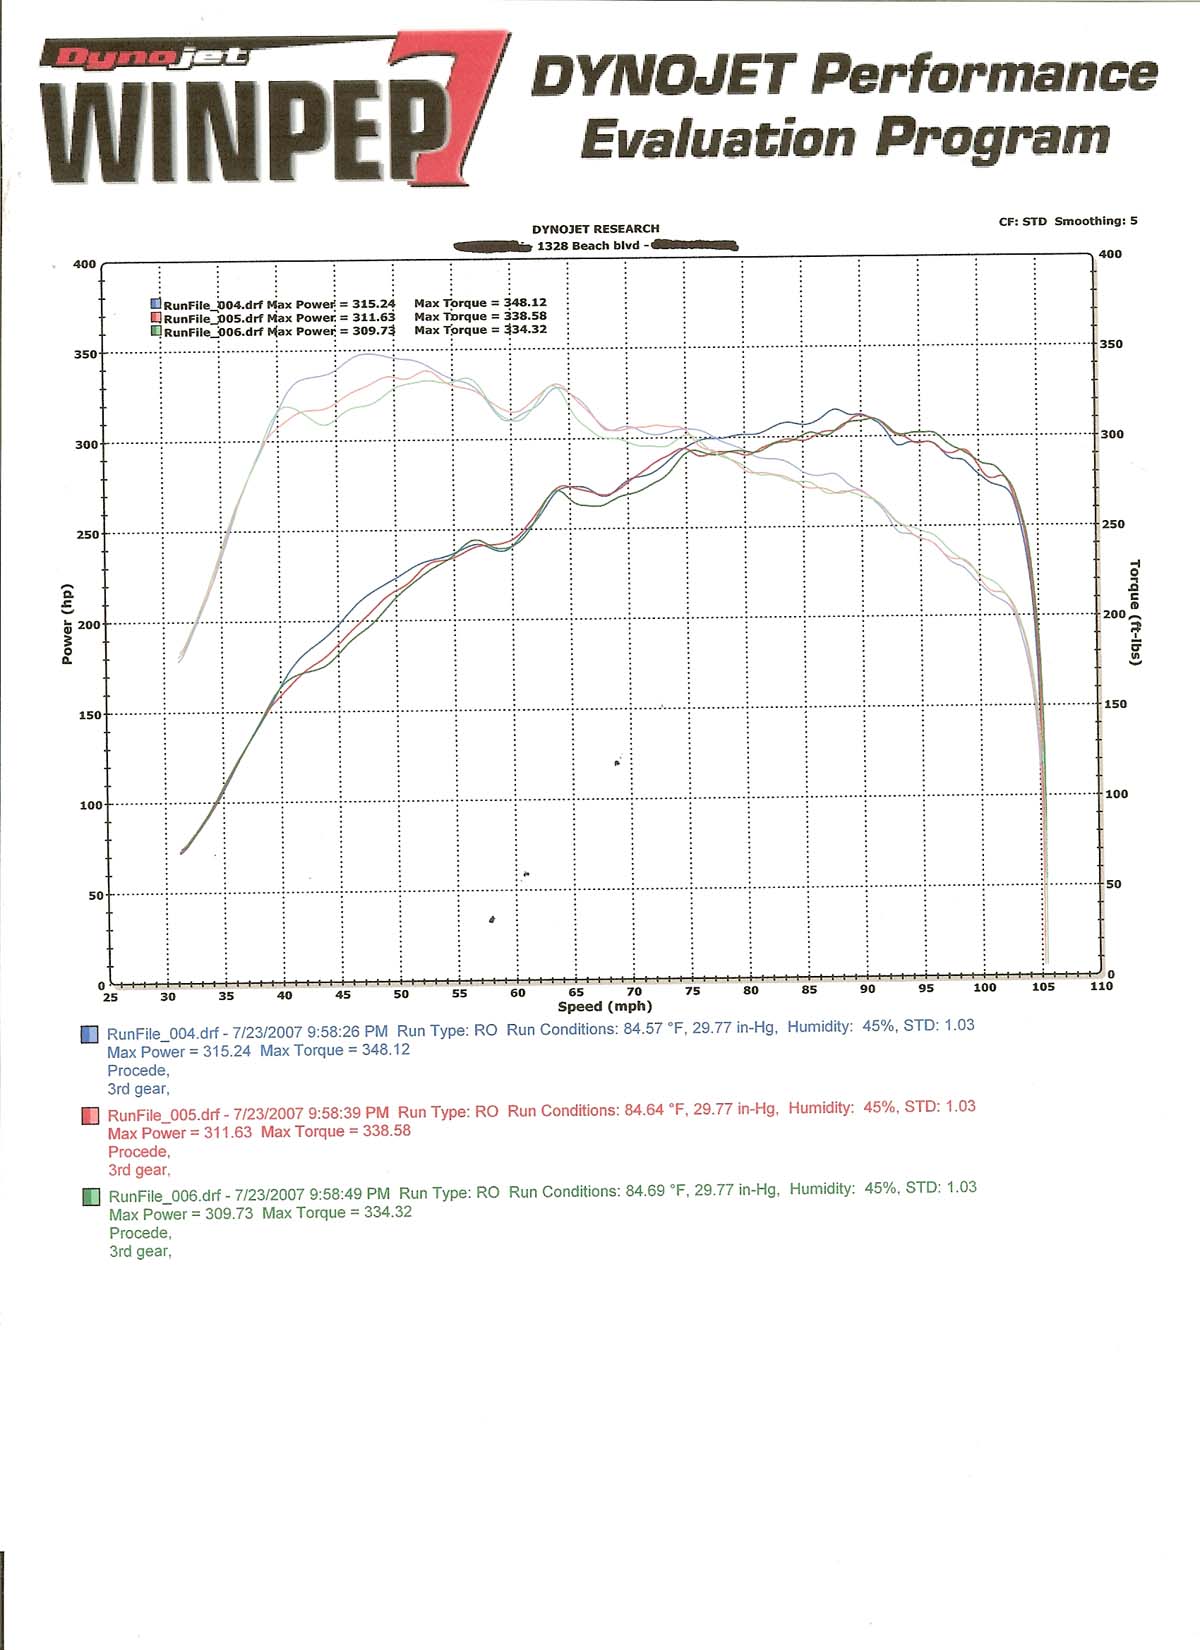 2007  BMW 335i  Dyno Graph